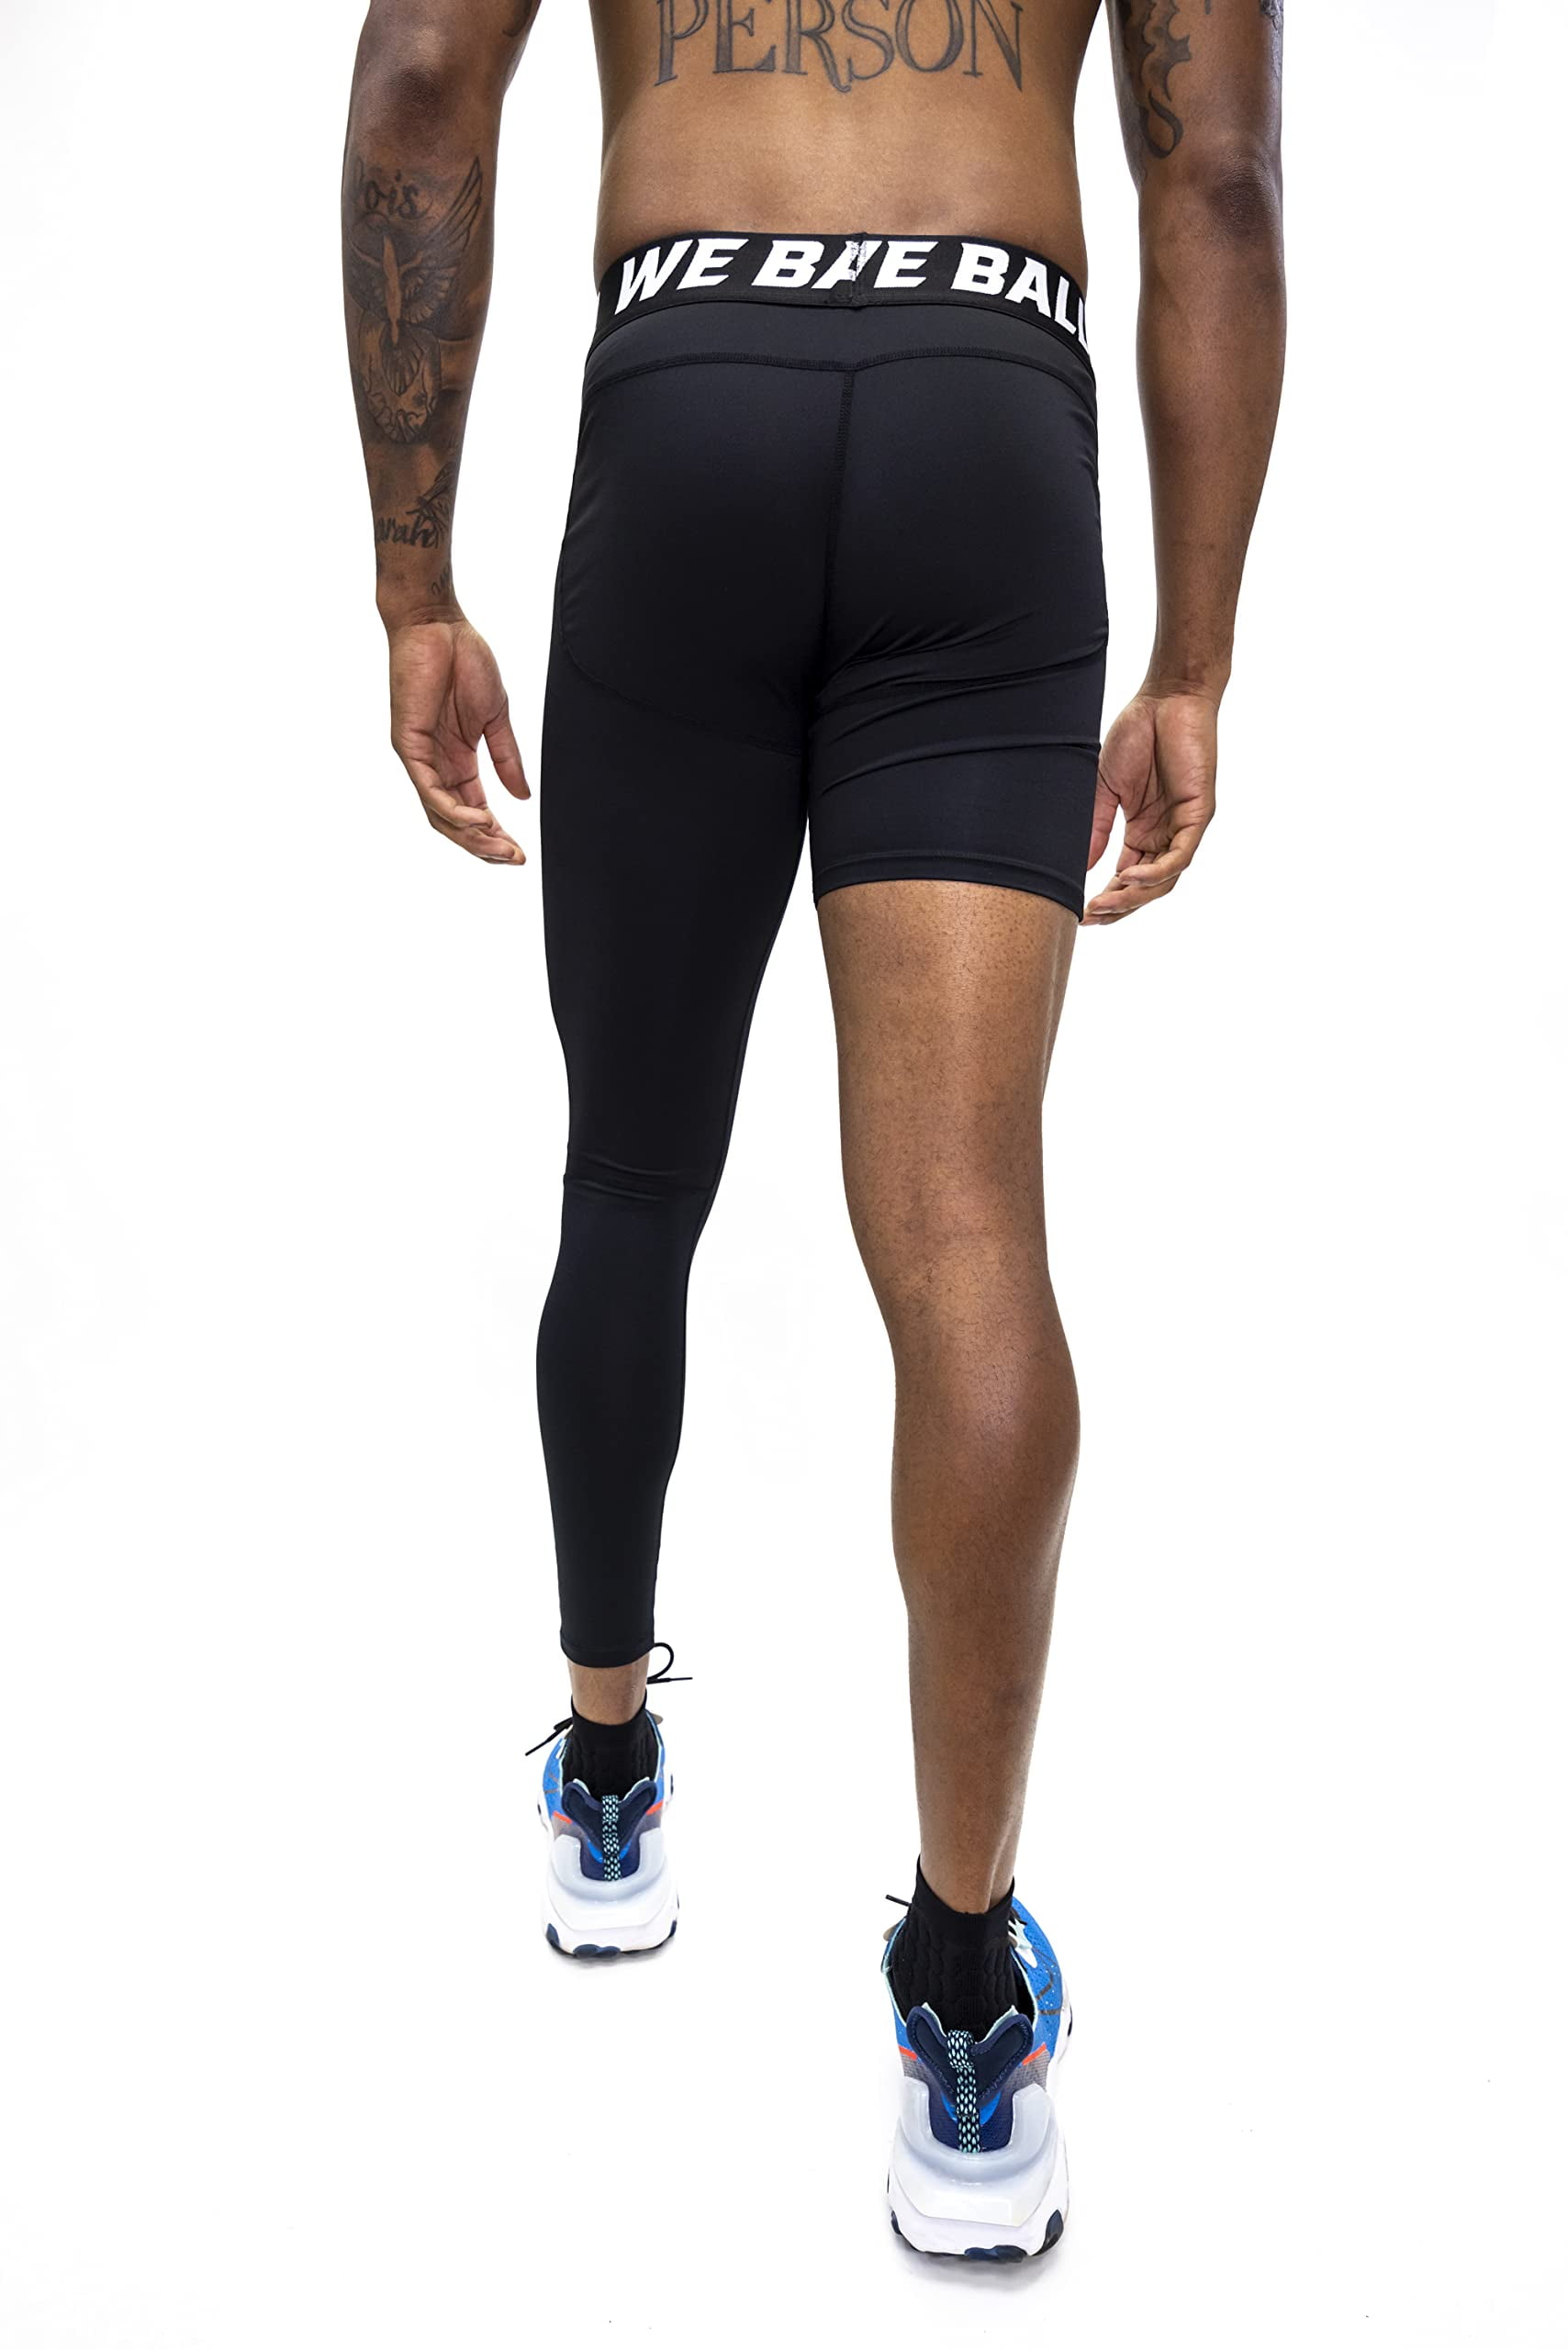 We Ball Sports Athletic Men's Single Leg Sports Tights  One Leg  Compression Base Layer Leggings for Men (Black, FULL M) 